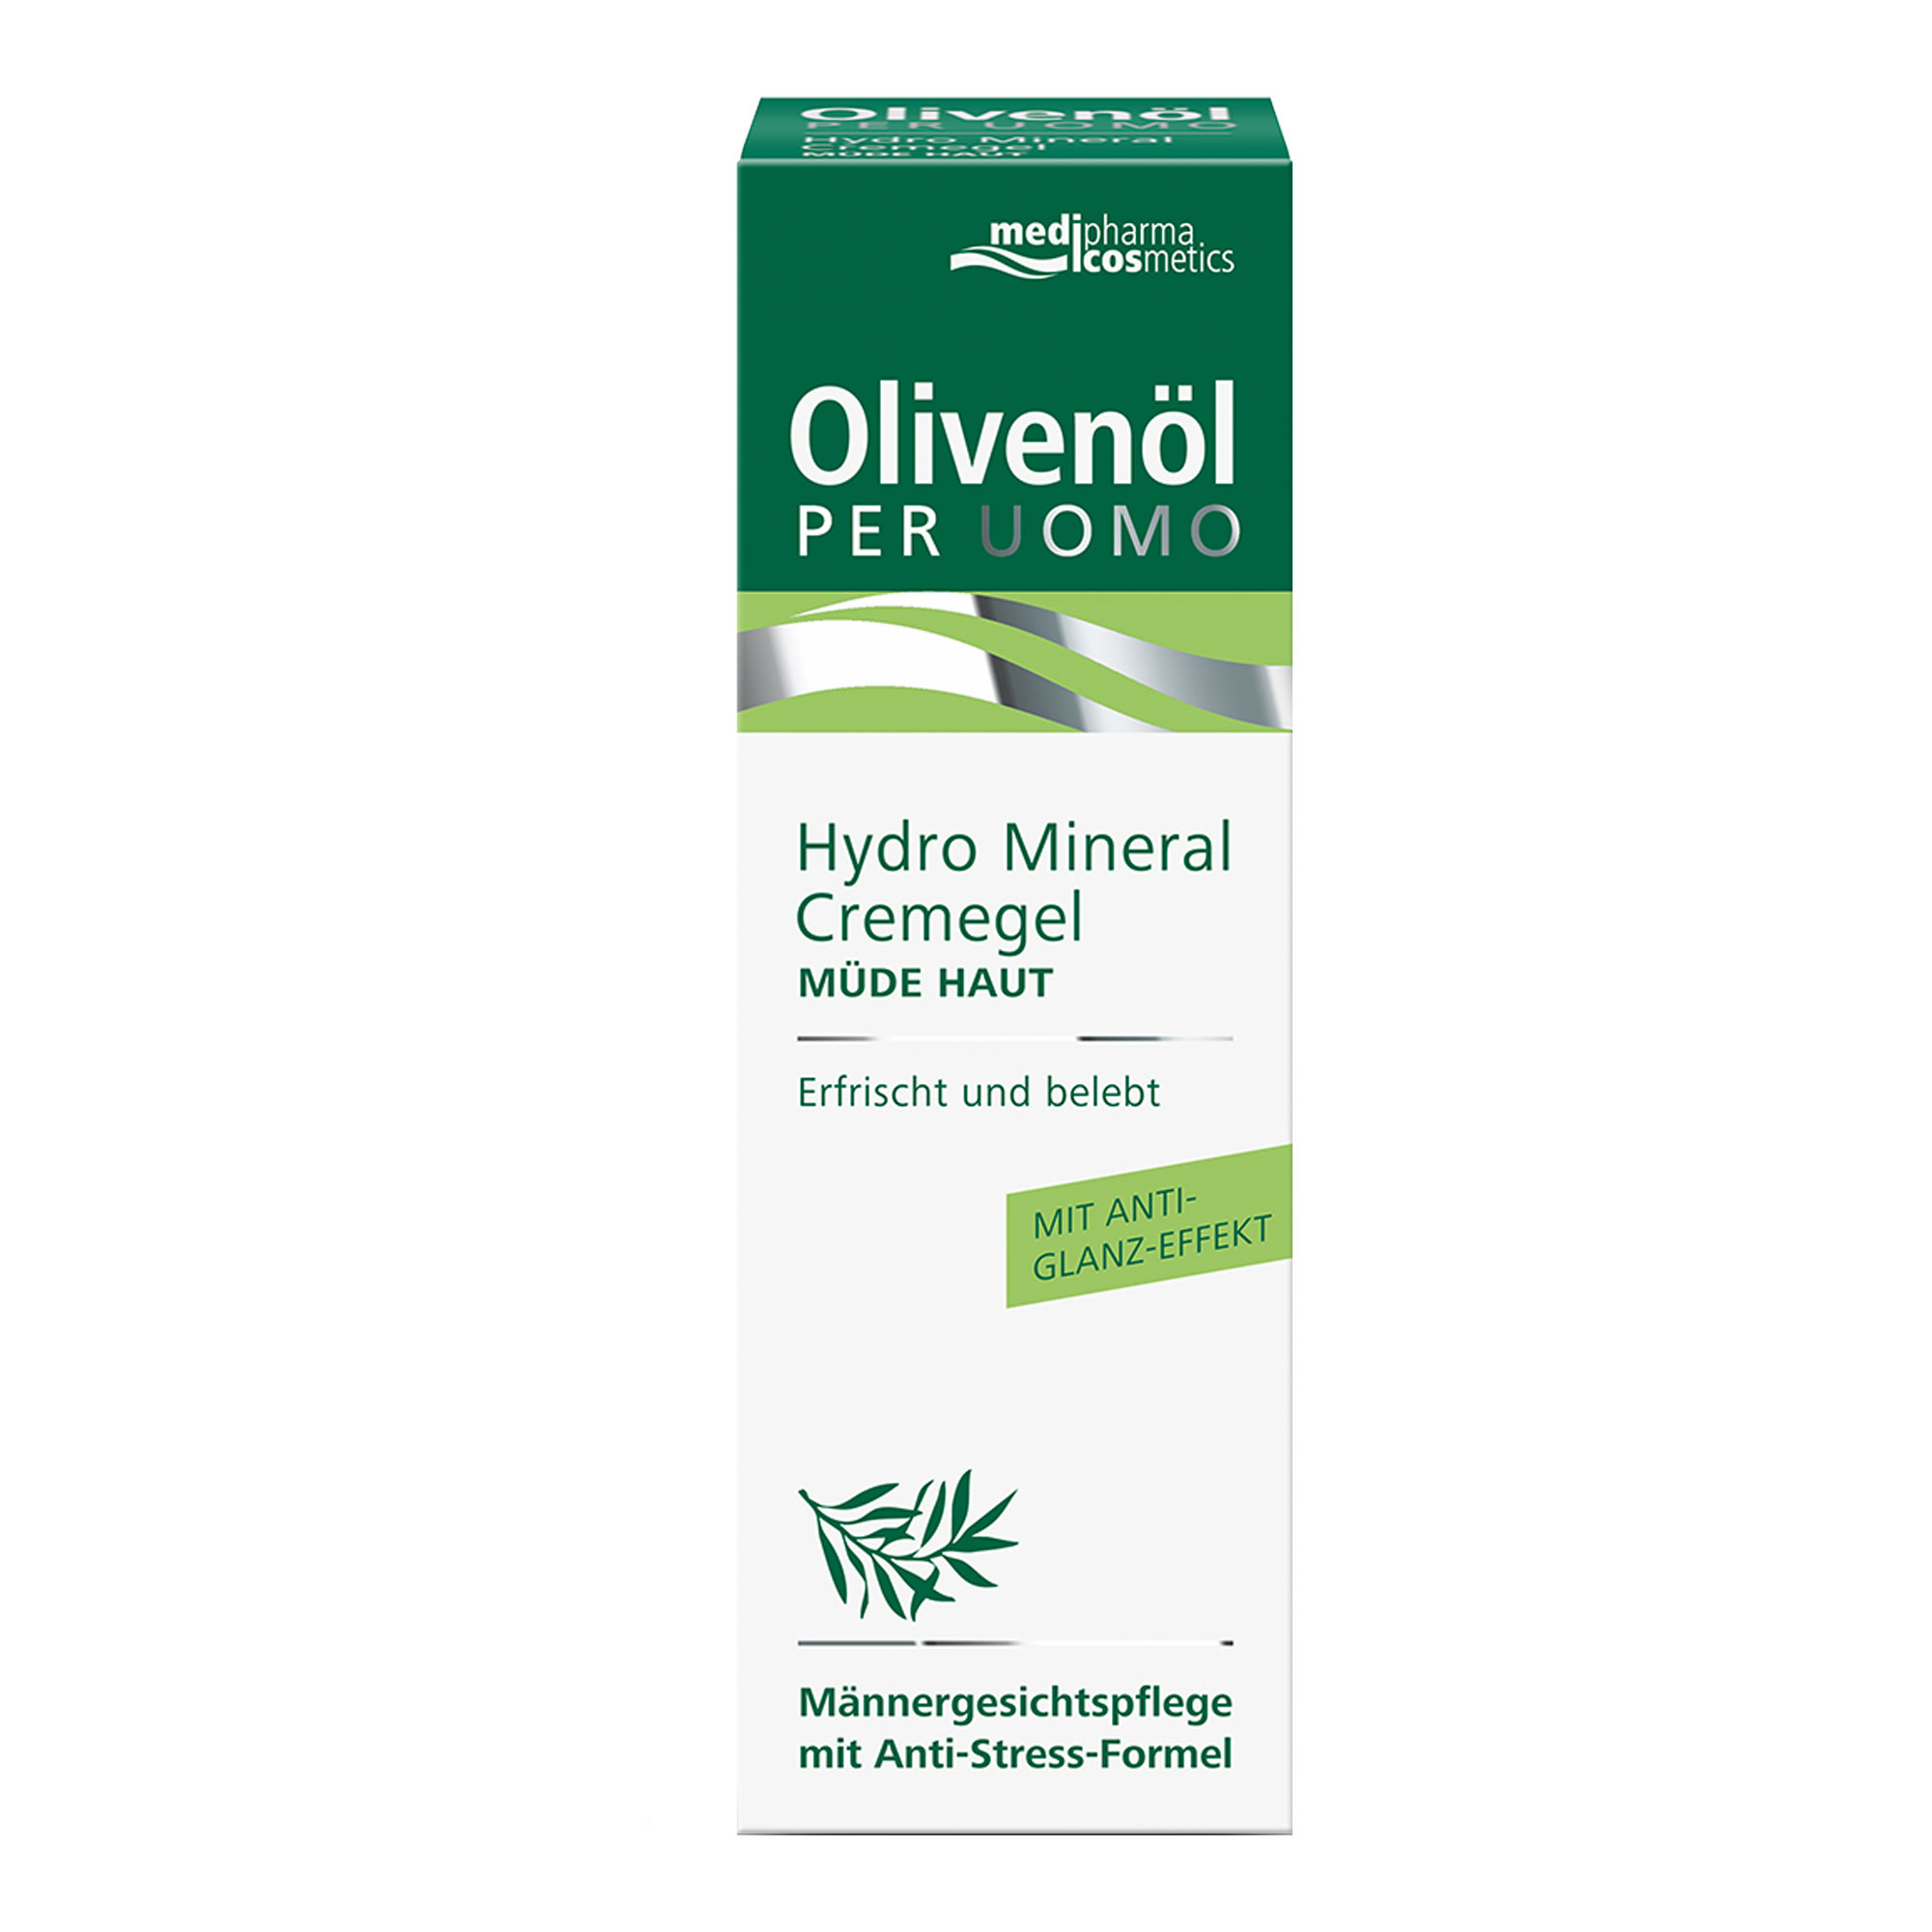 Olivenöl per Uomo Hydro Mineral Cremegel